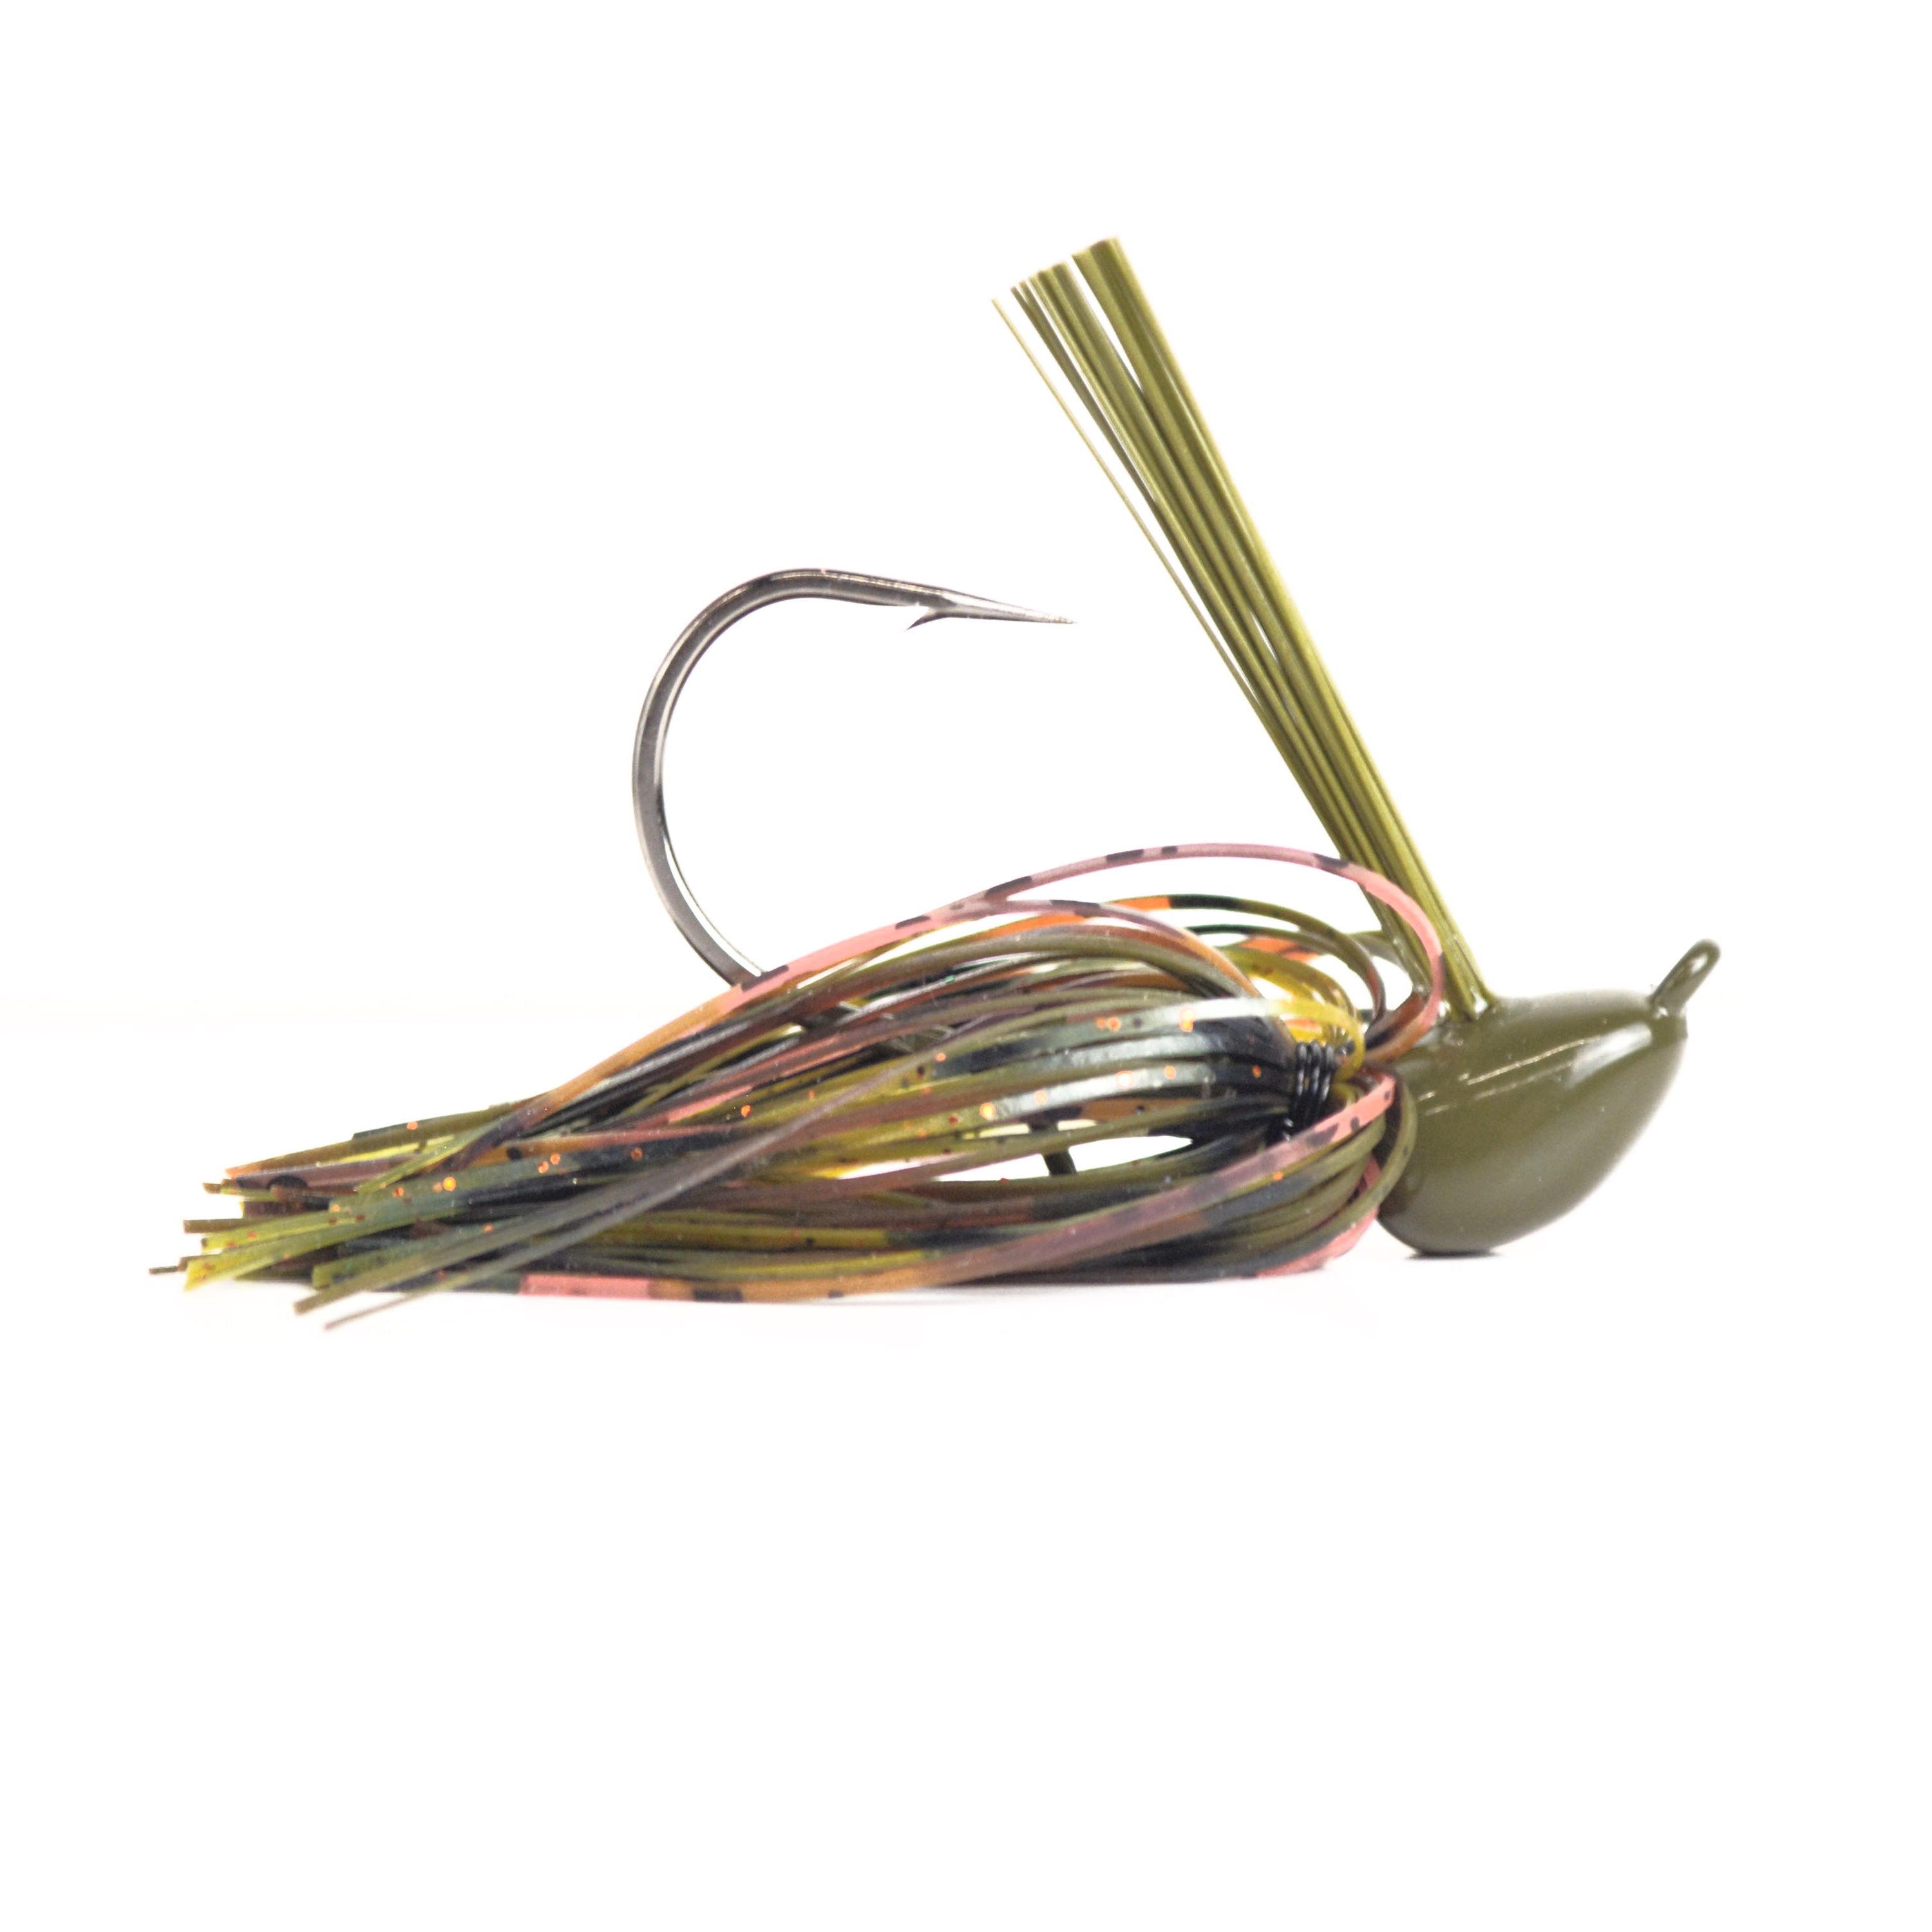 Motion Fishing Company - Custom Bass Jigs, Soft Plastics, and Apparel!